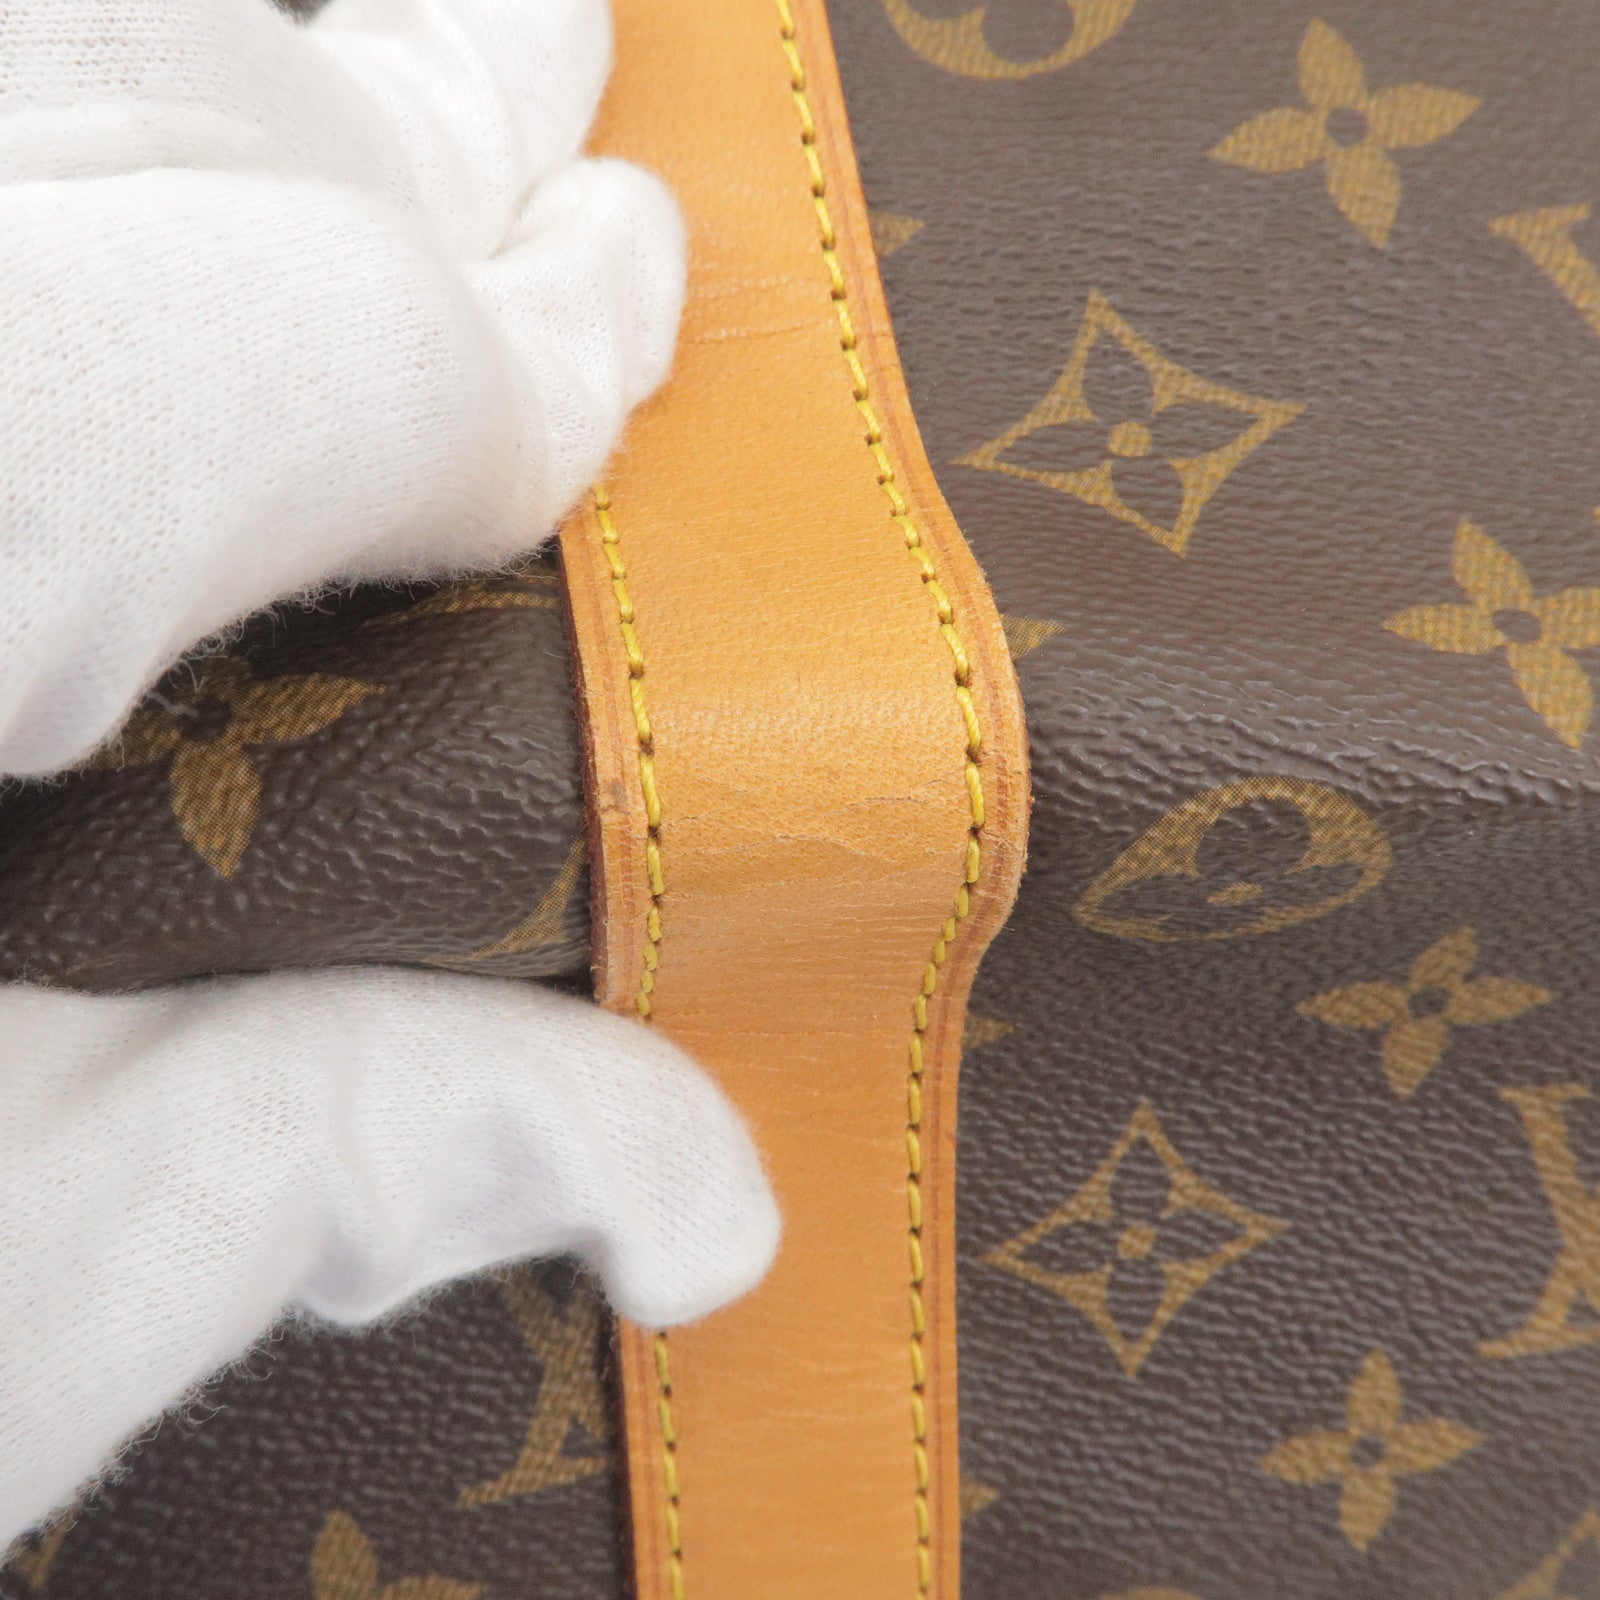 Louis Vuitton Monogram Keepall 55 - Brown Luggage, Handbags